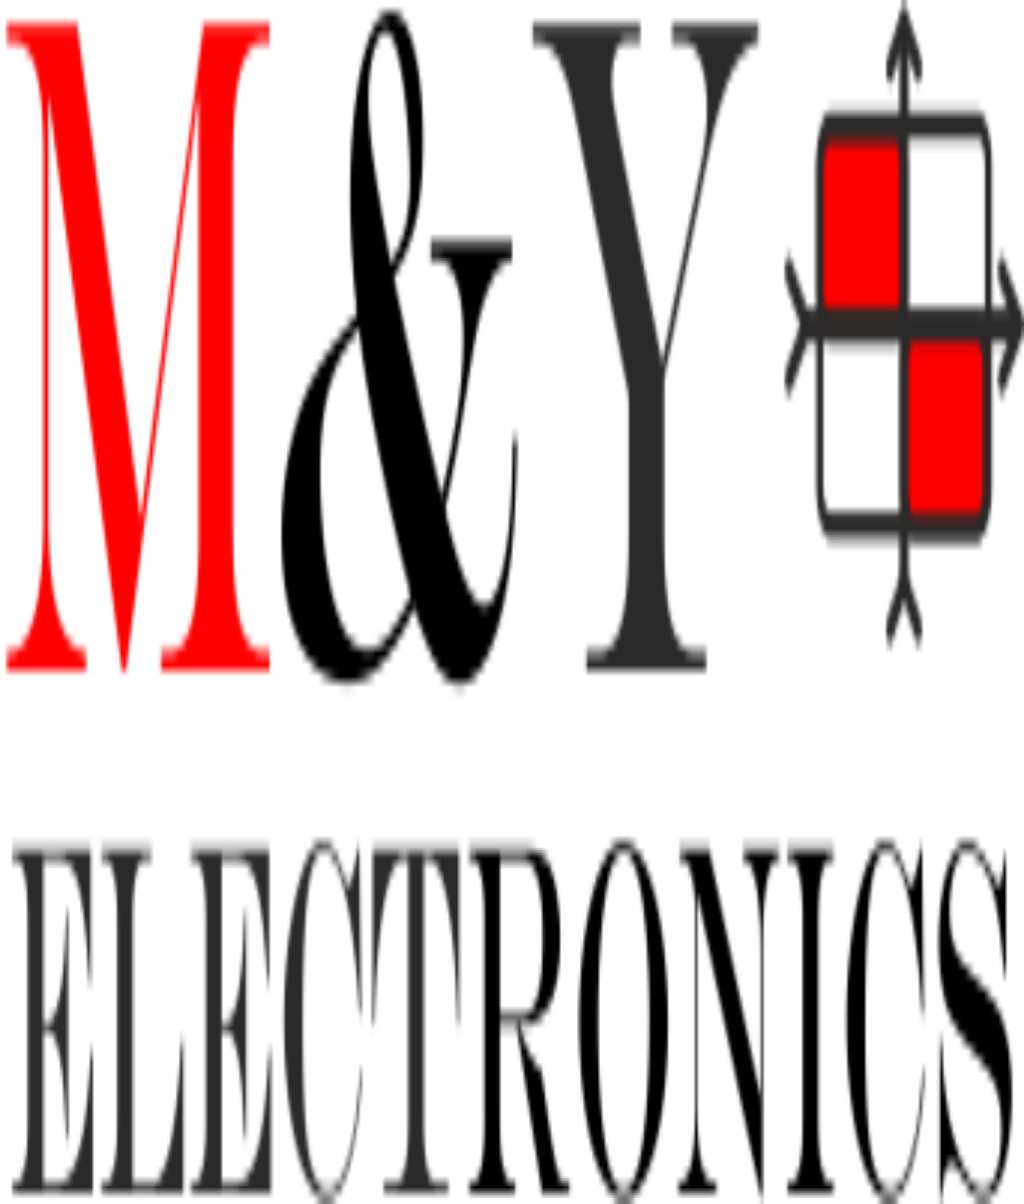 M&Y ELECTRONICS